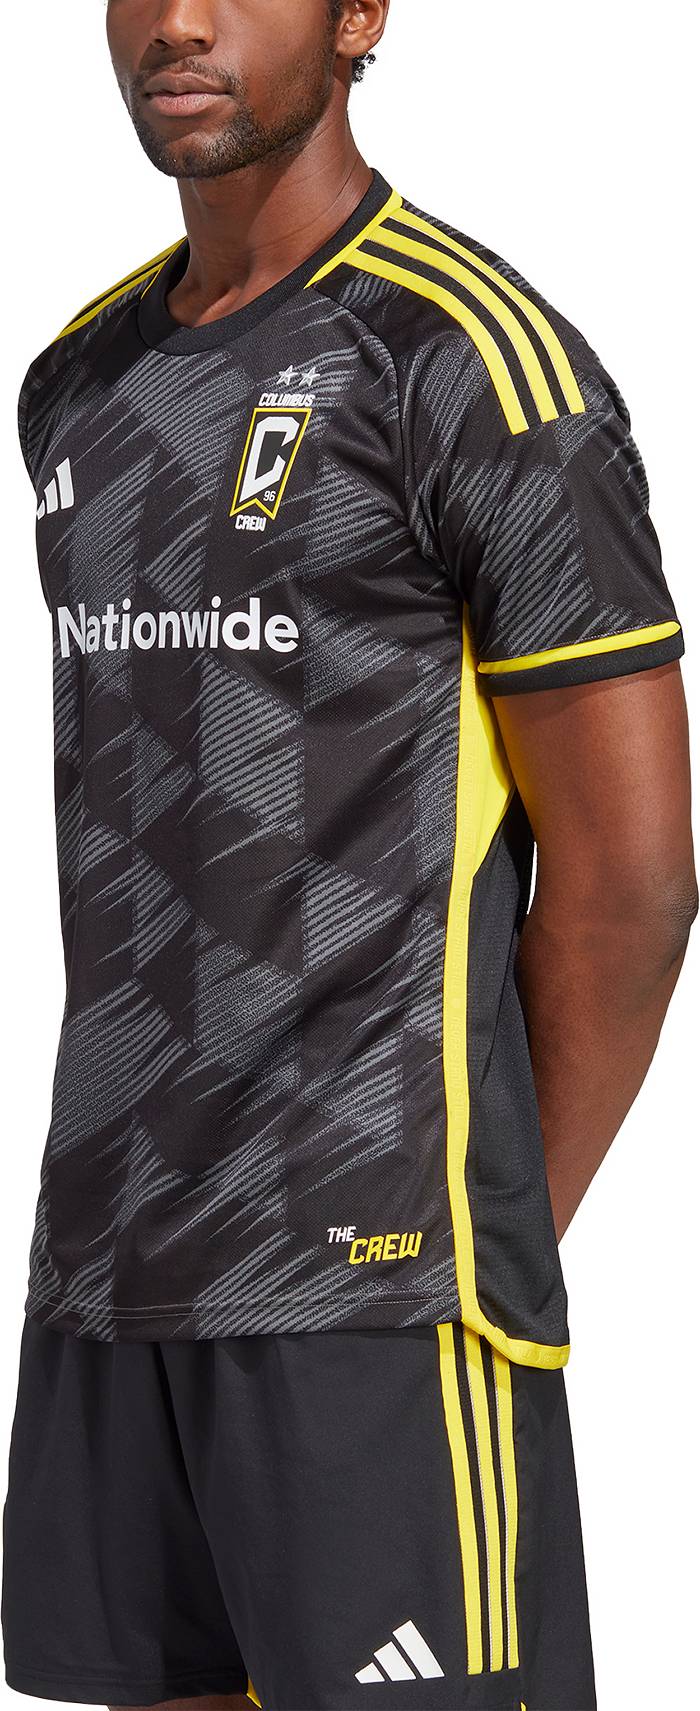 Columbus Crew unveils new primary uniform for 2021 MLS season